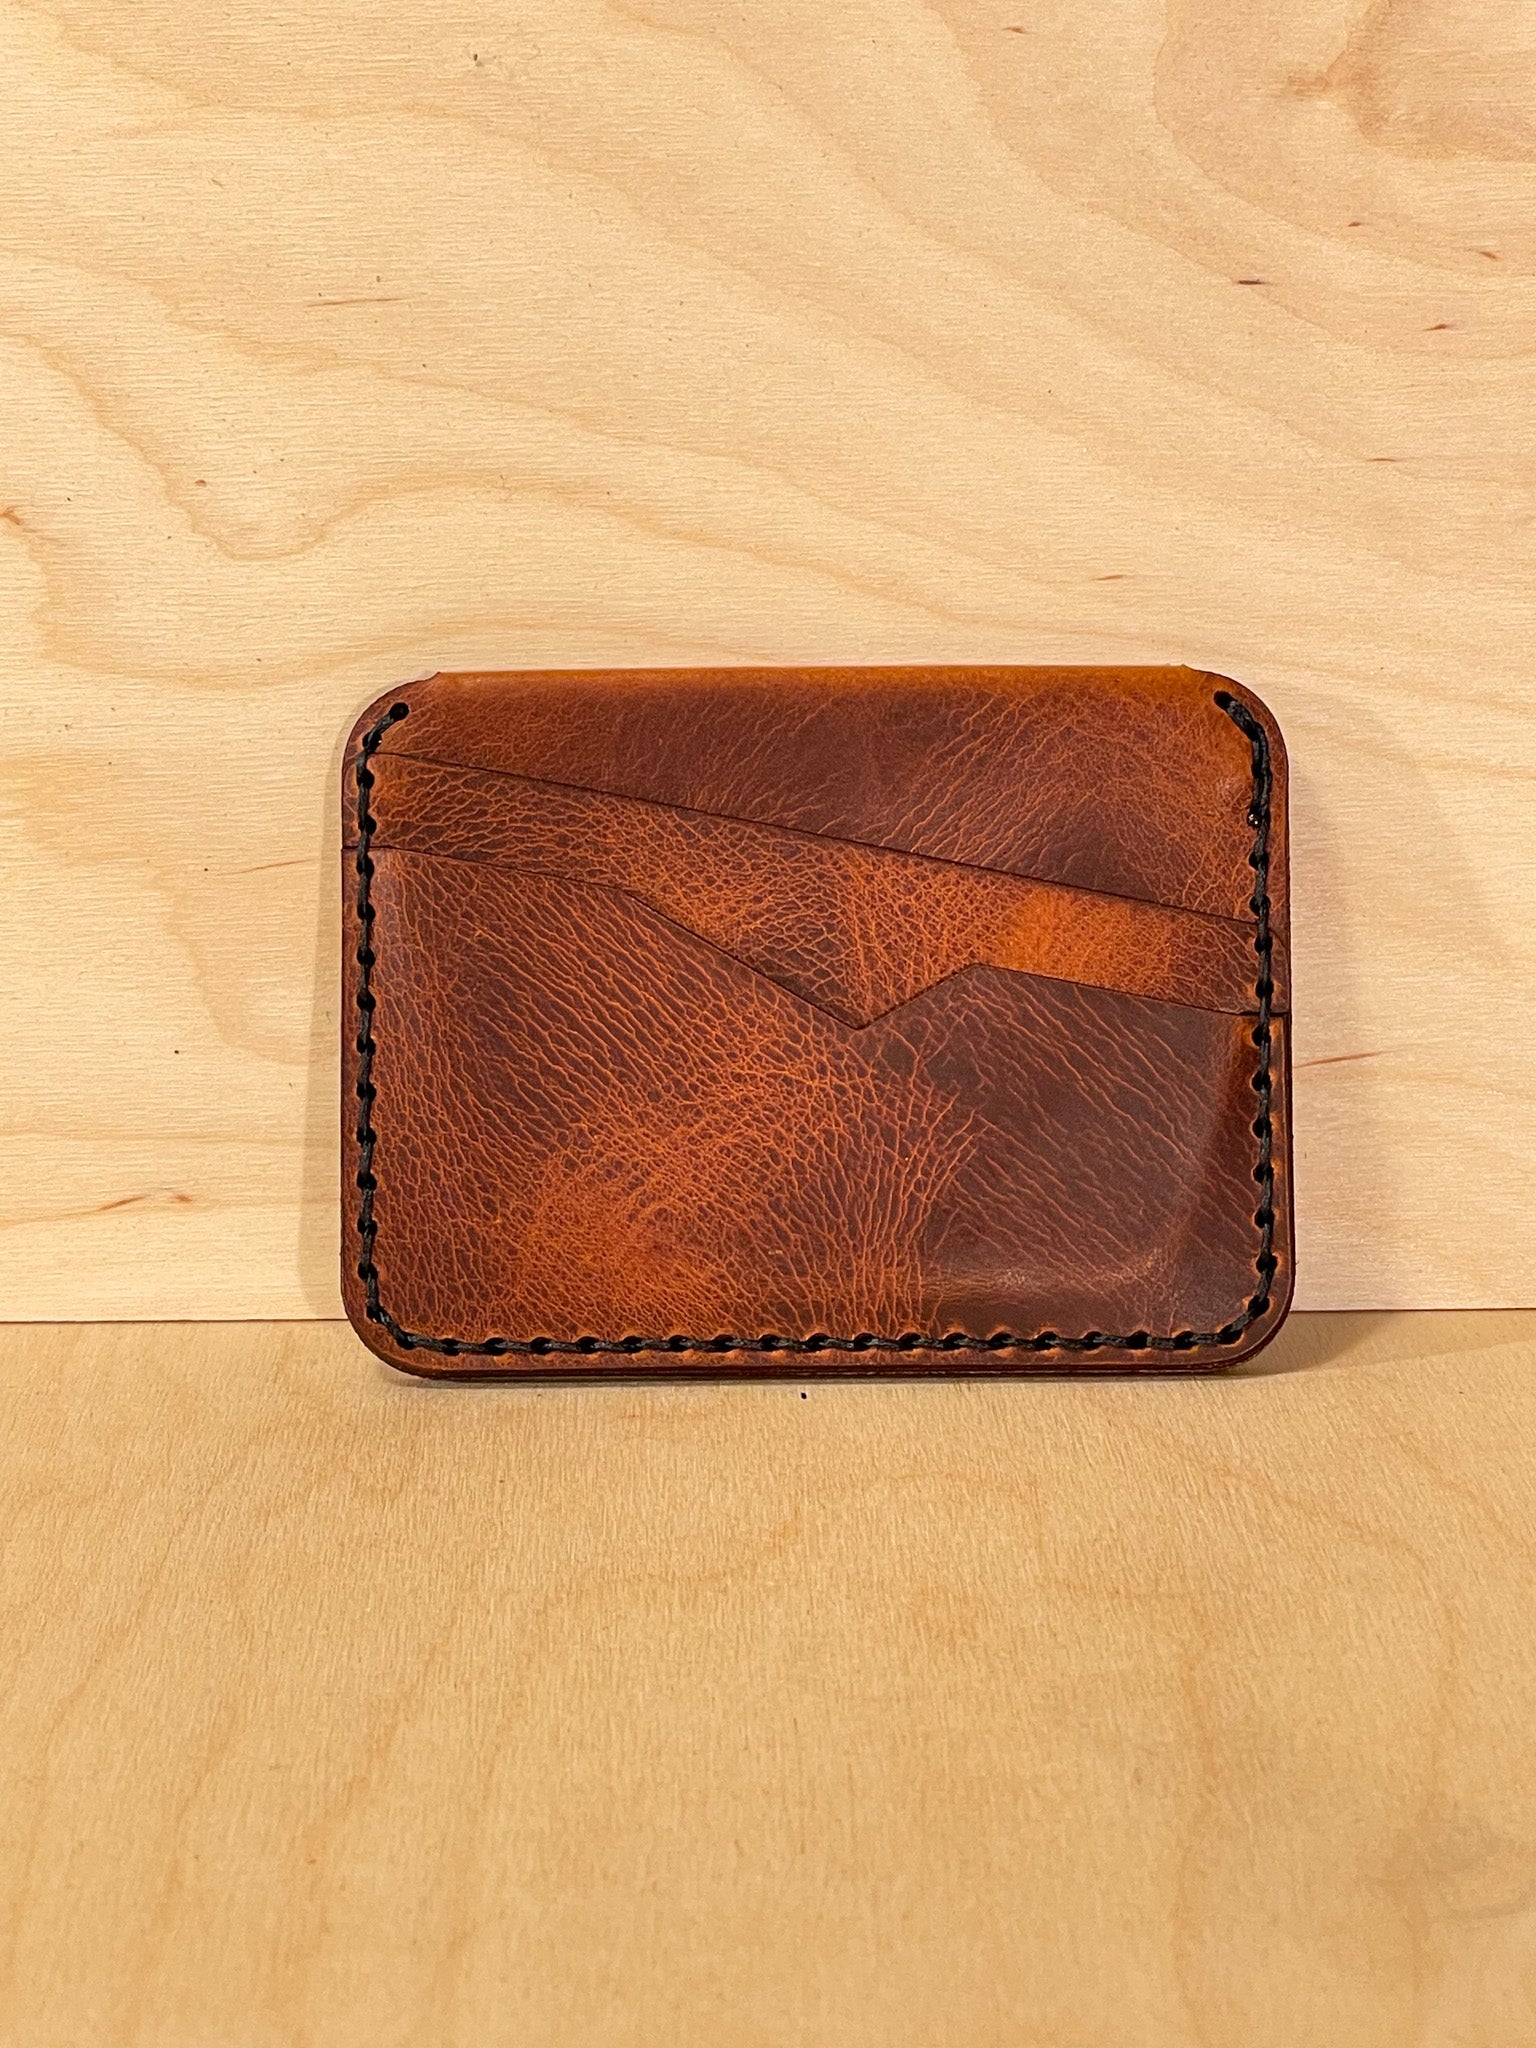 Wrangler Minimalist Leather Wallet OOAK 1